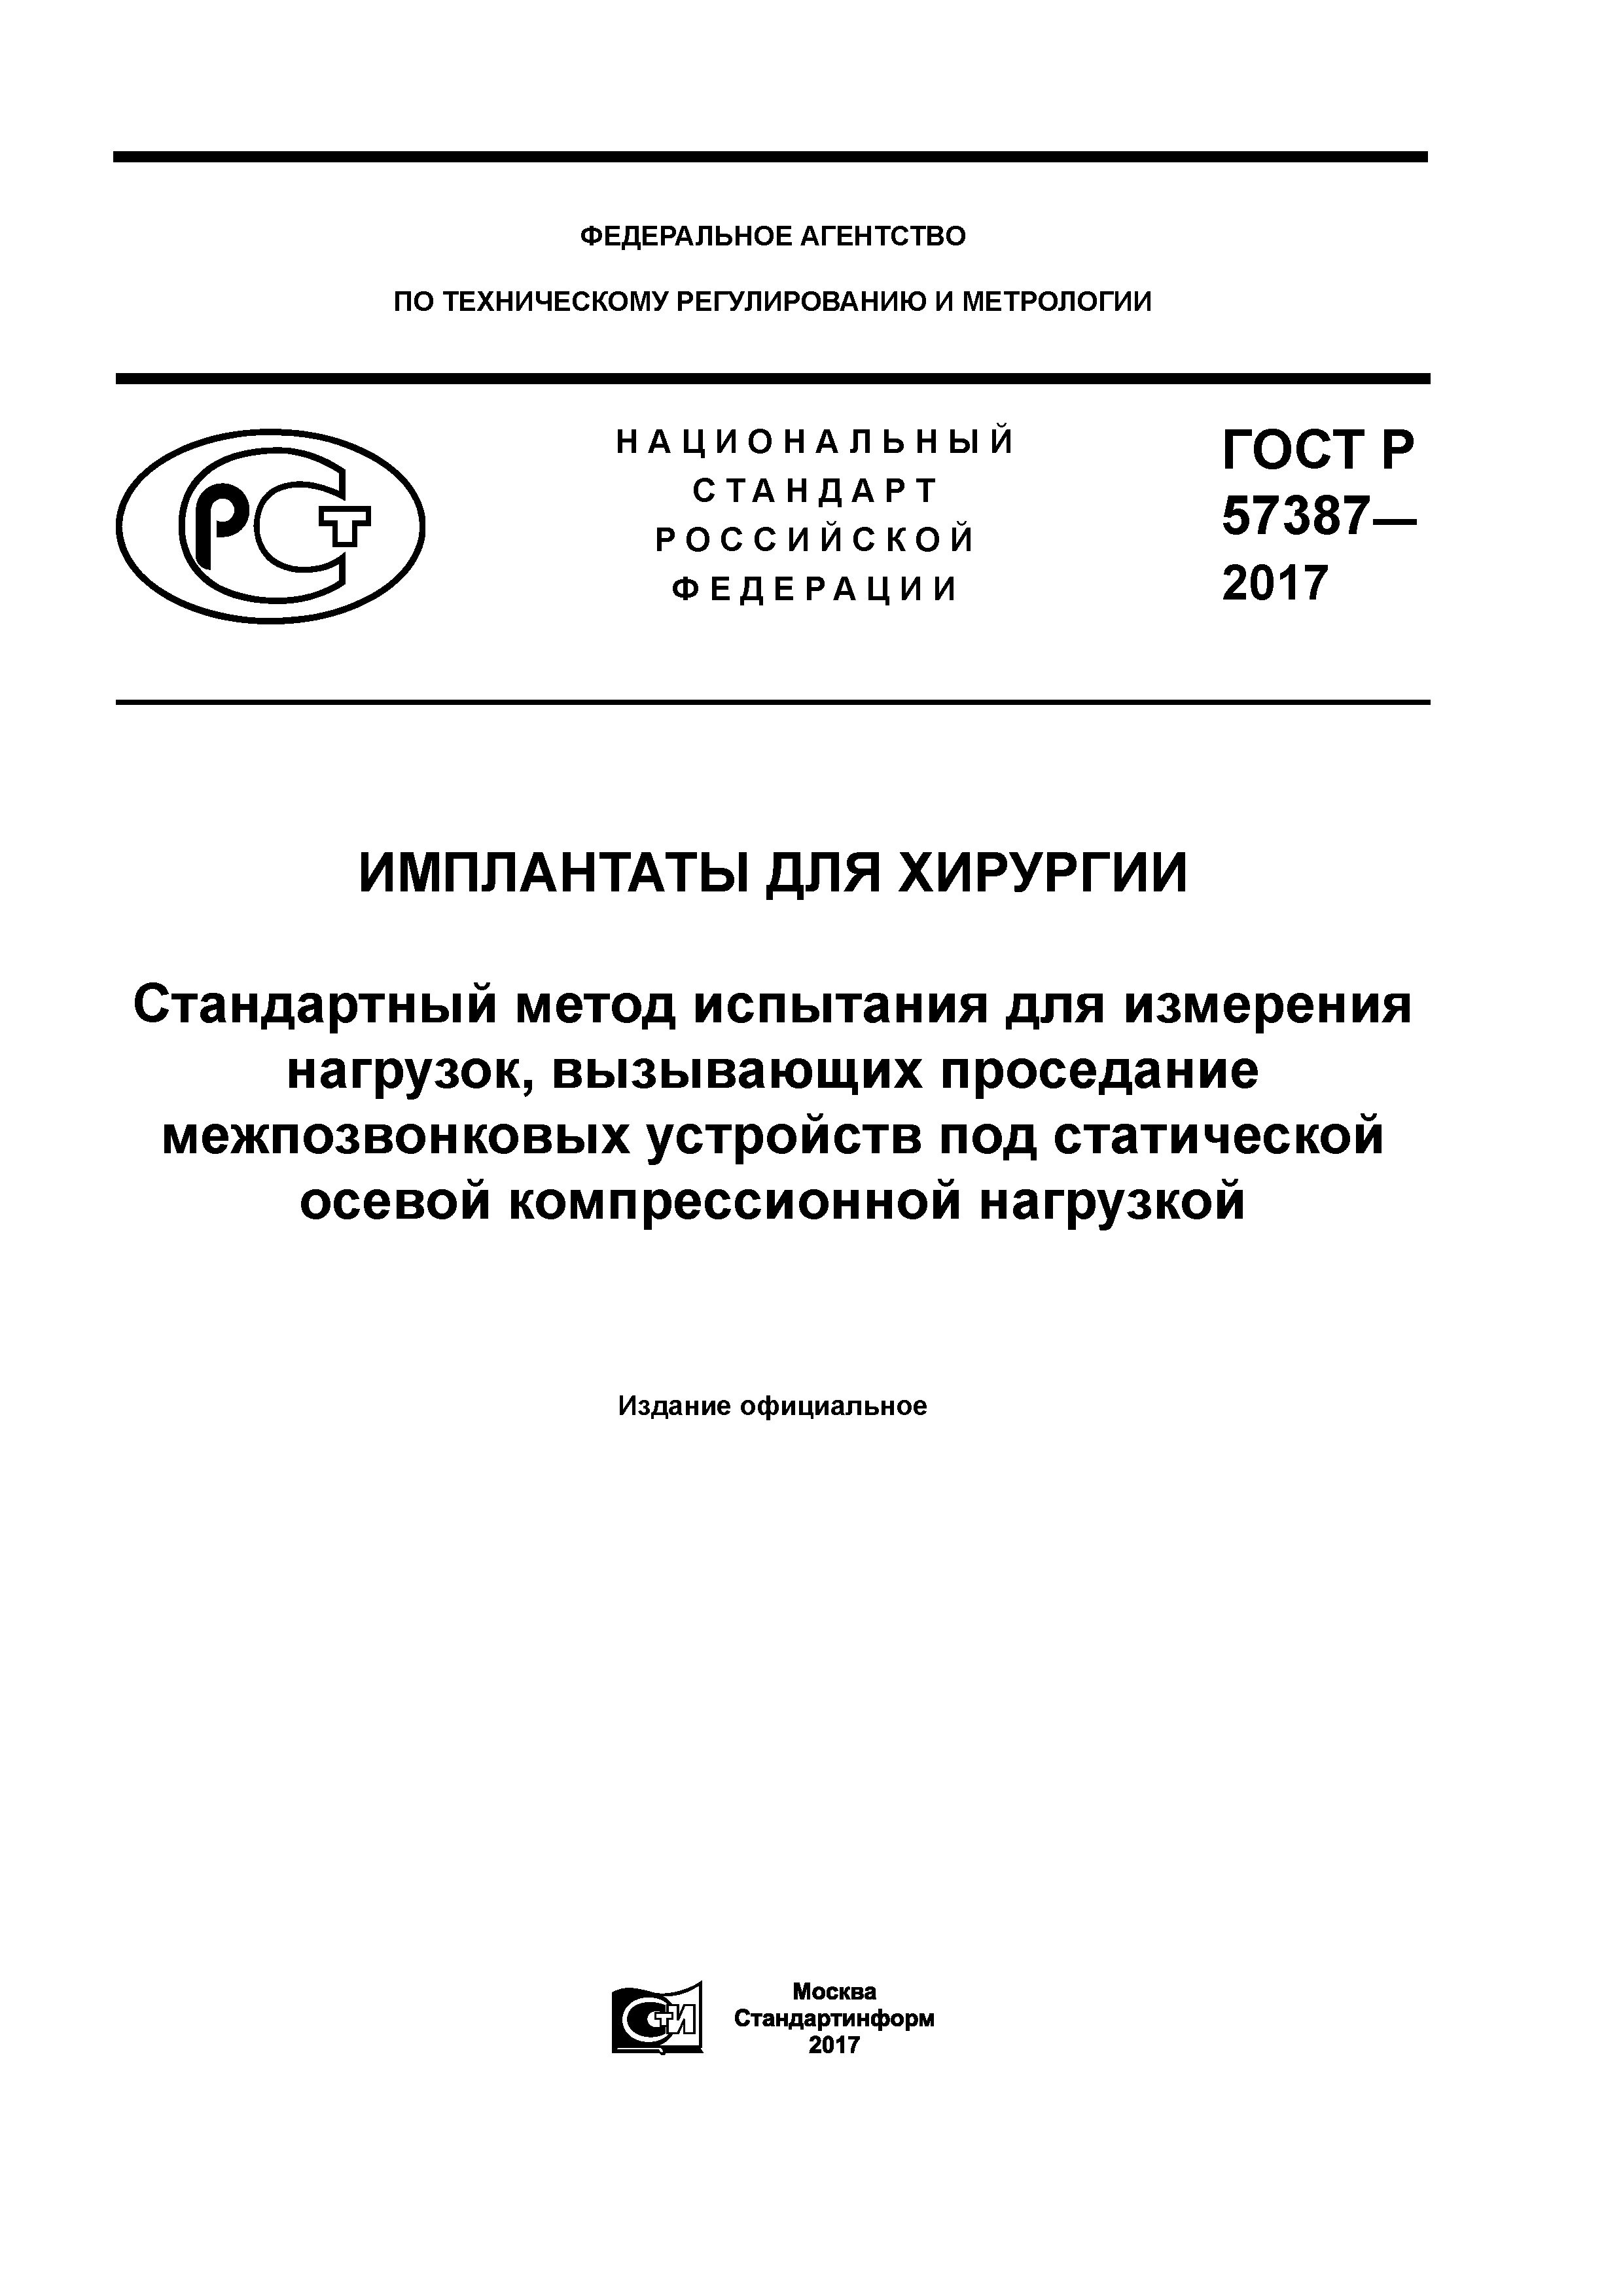 ГОСТ Р 57387-2017